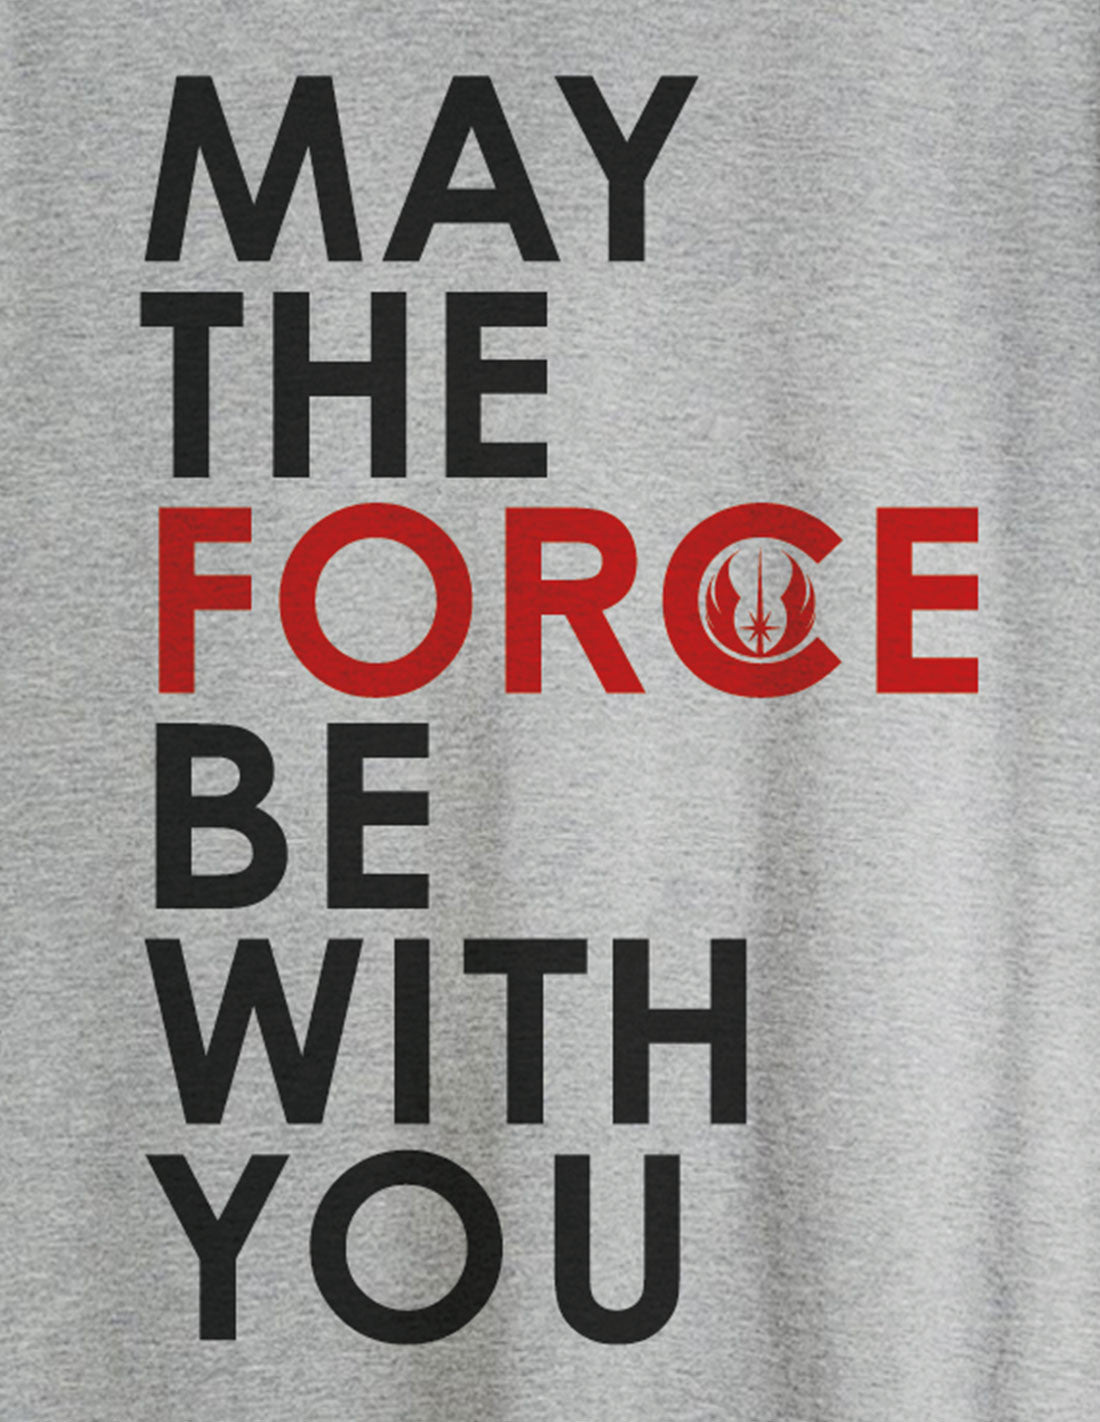 Star Wars T-shirt - May The Force